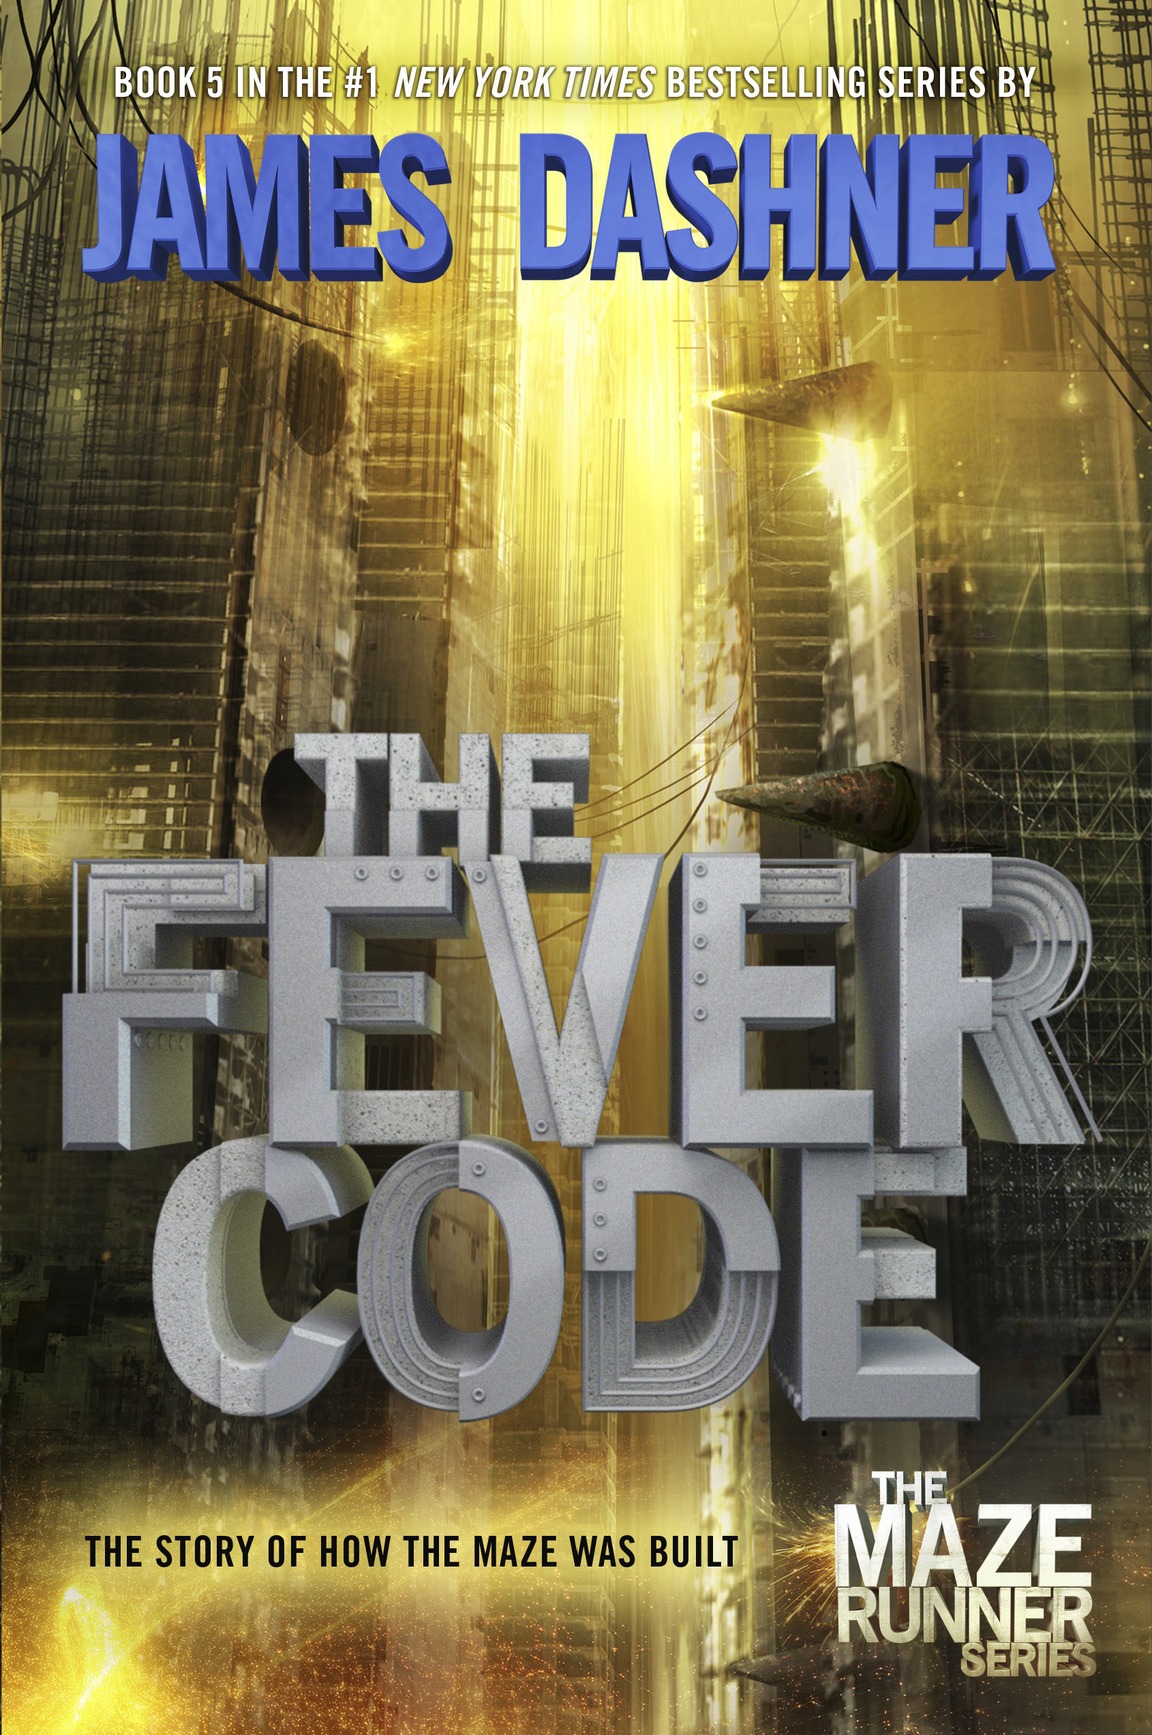 The Fever Code (2016) by James Dashner